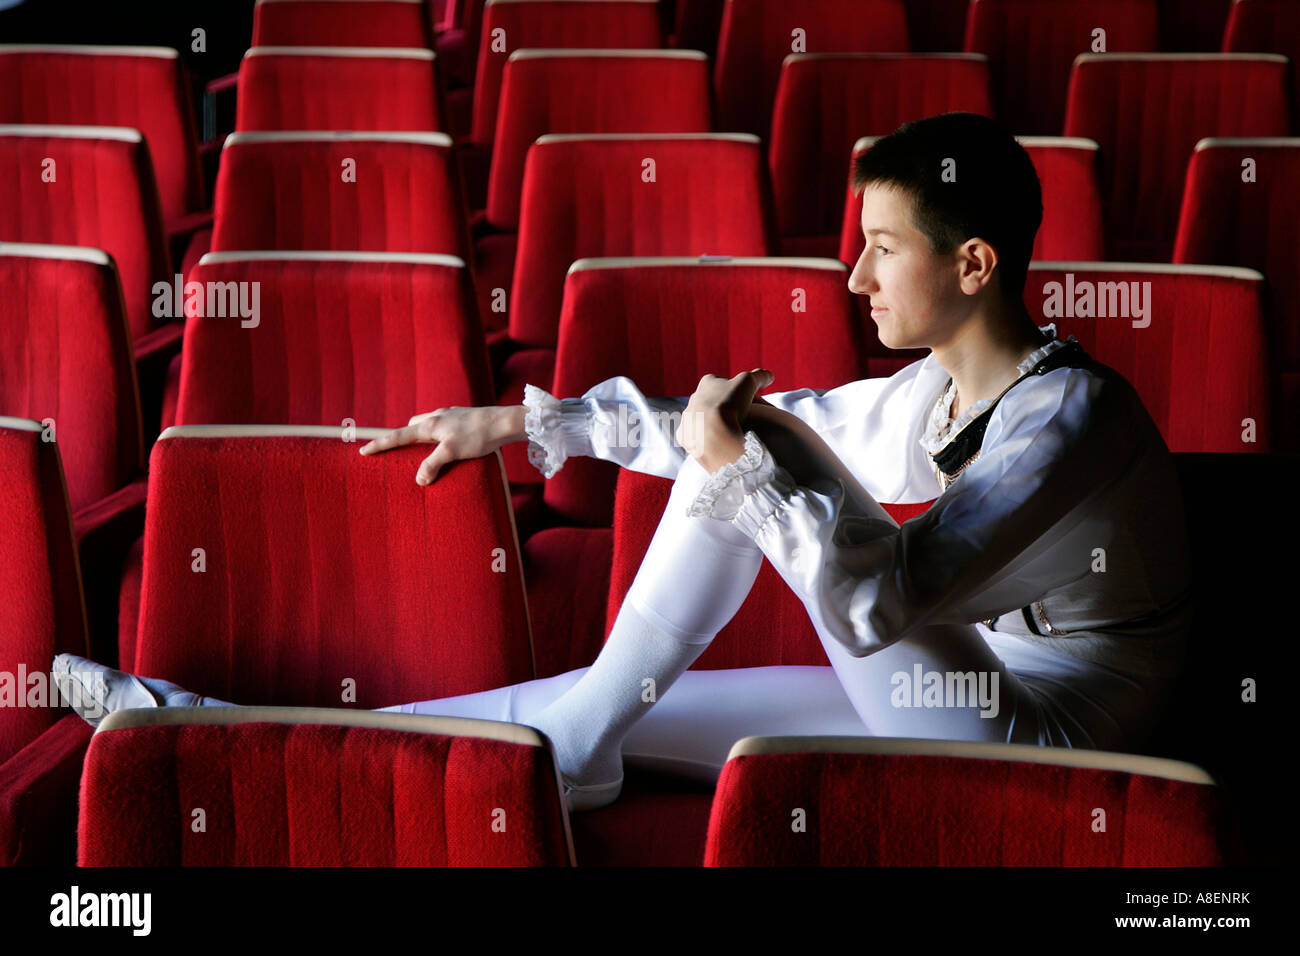 Boy ballet dancer actor Stock Photo